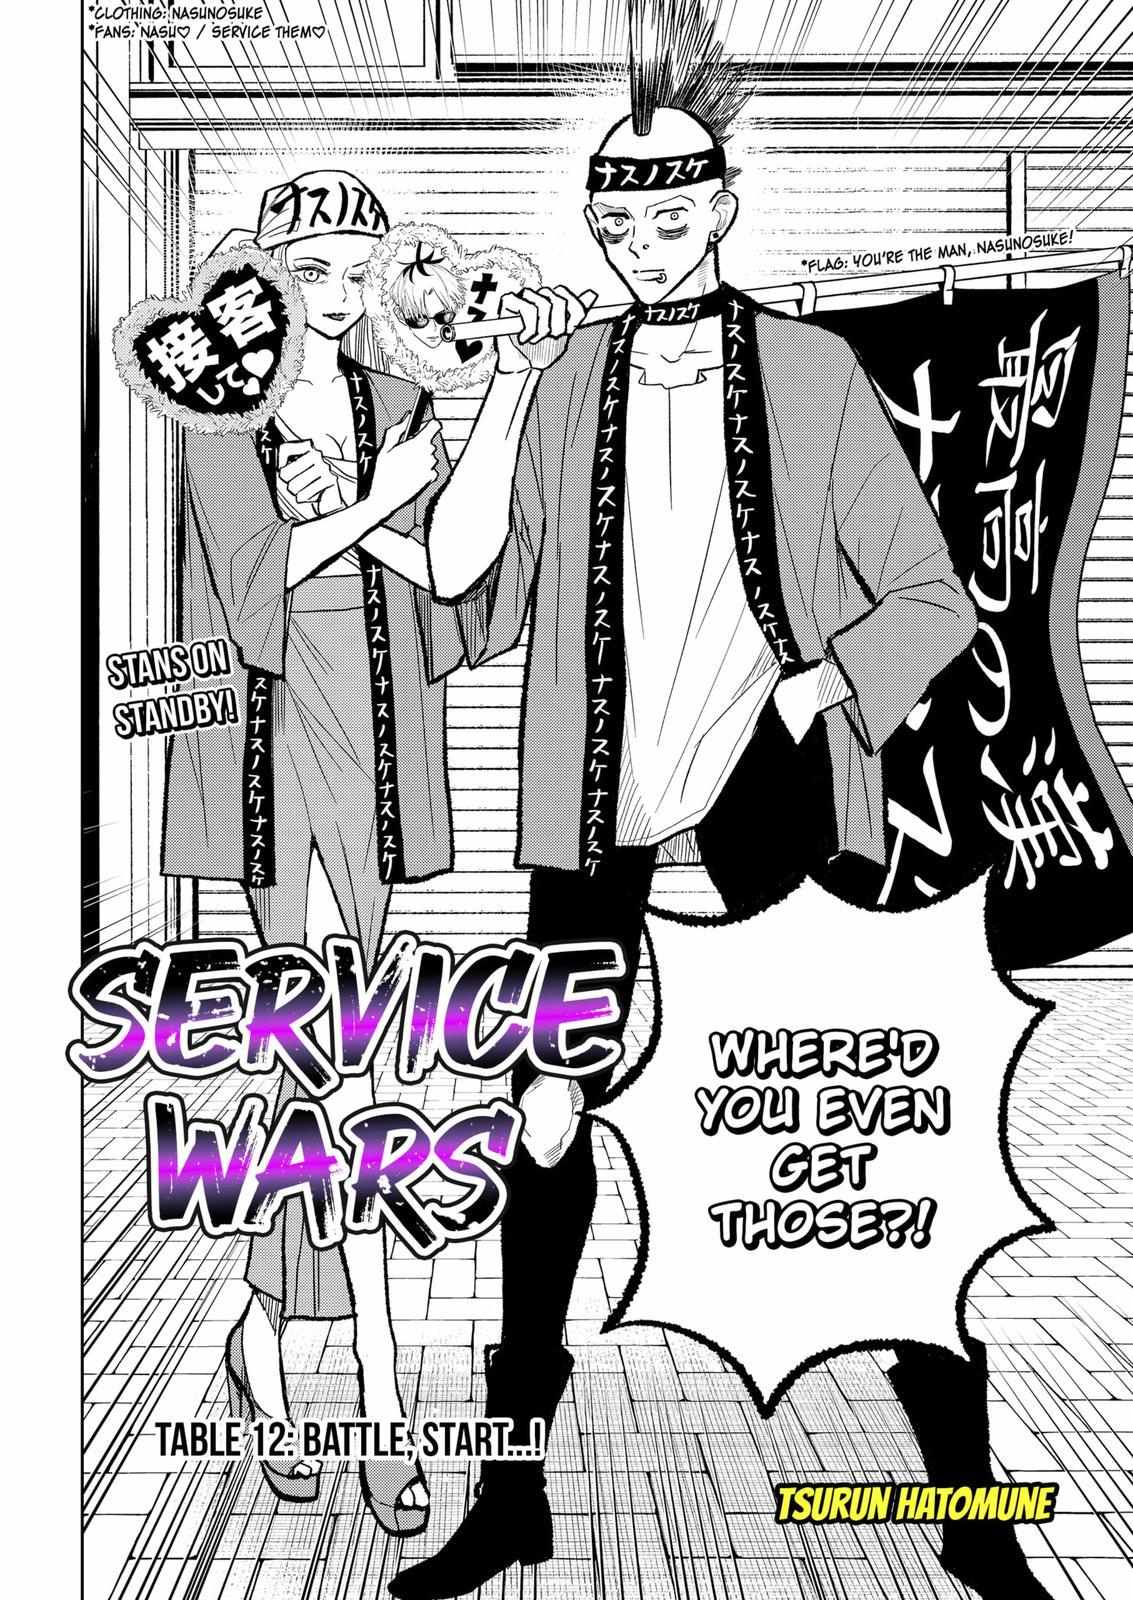 Service Wars - Page 3